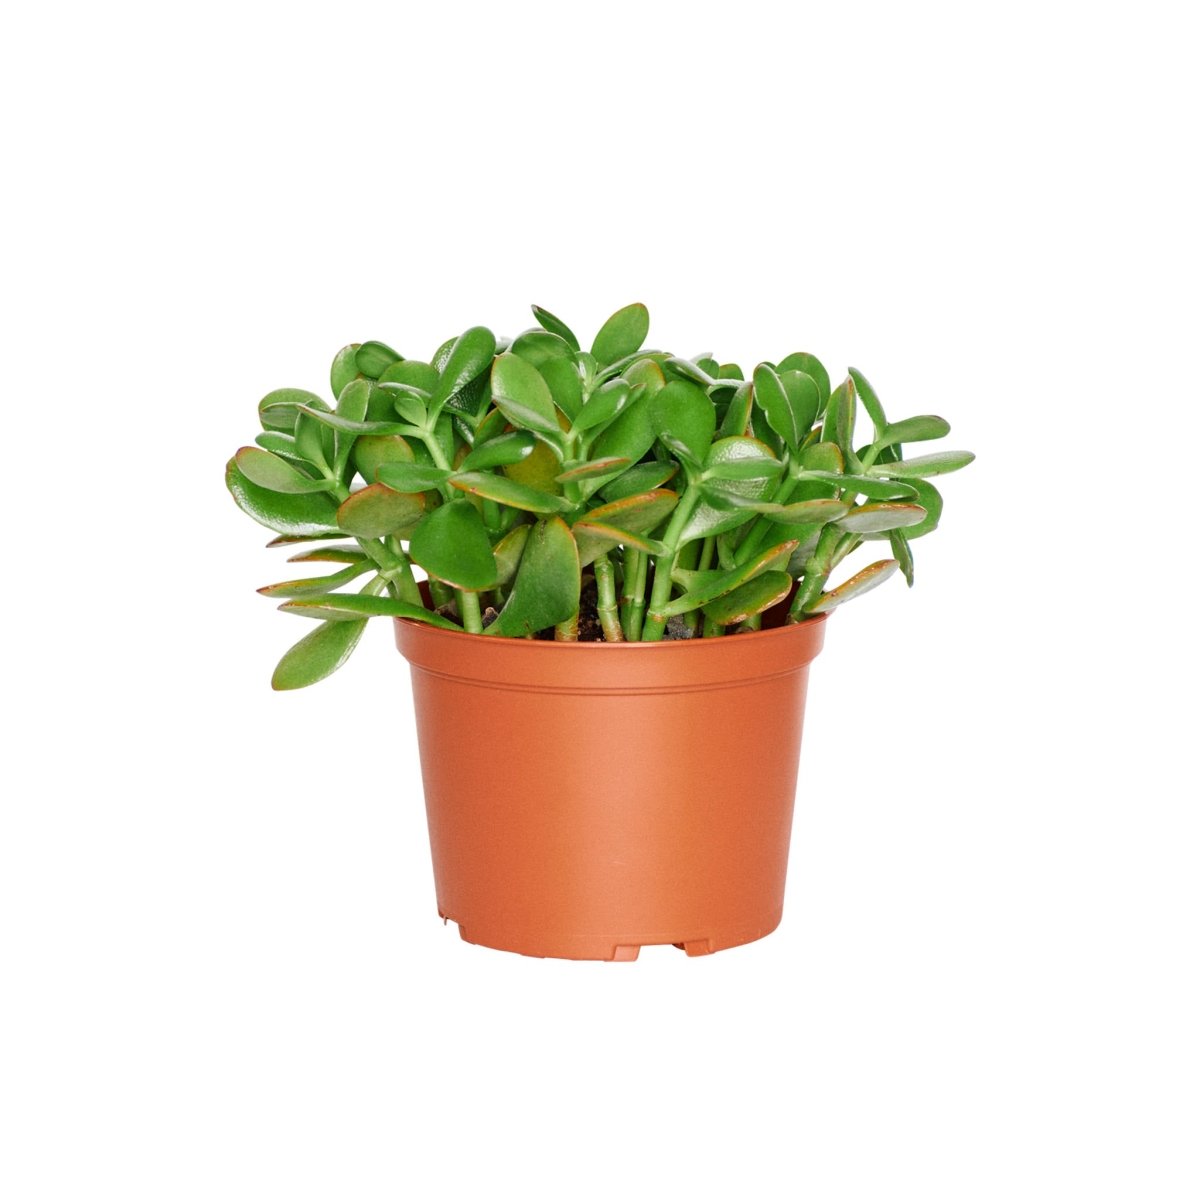 Jade Plant In 6" Nursery Pot - My City Plants